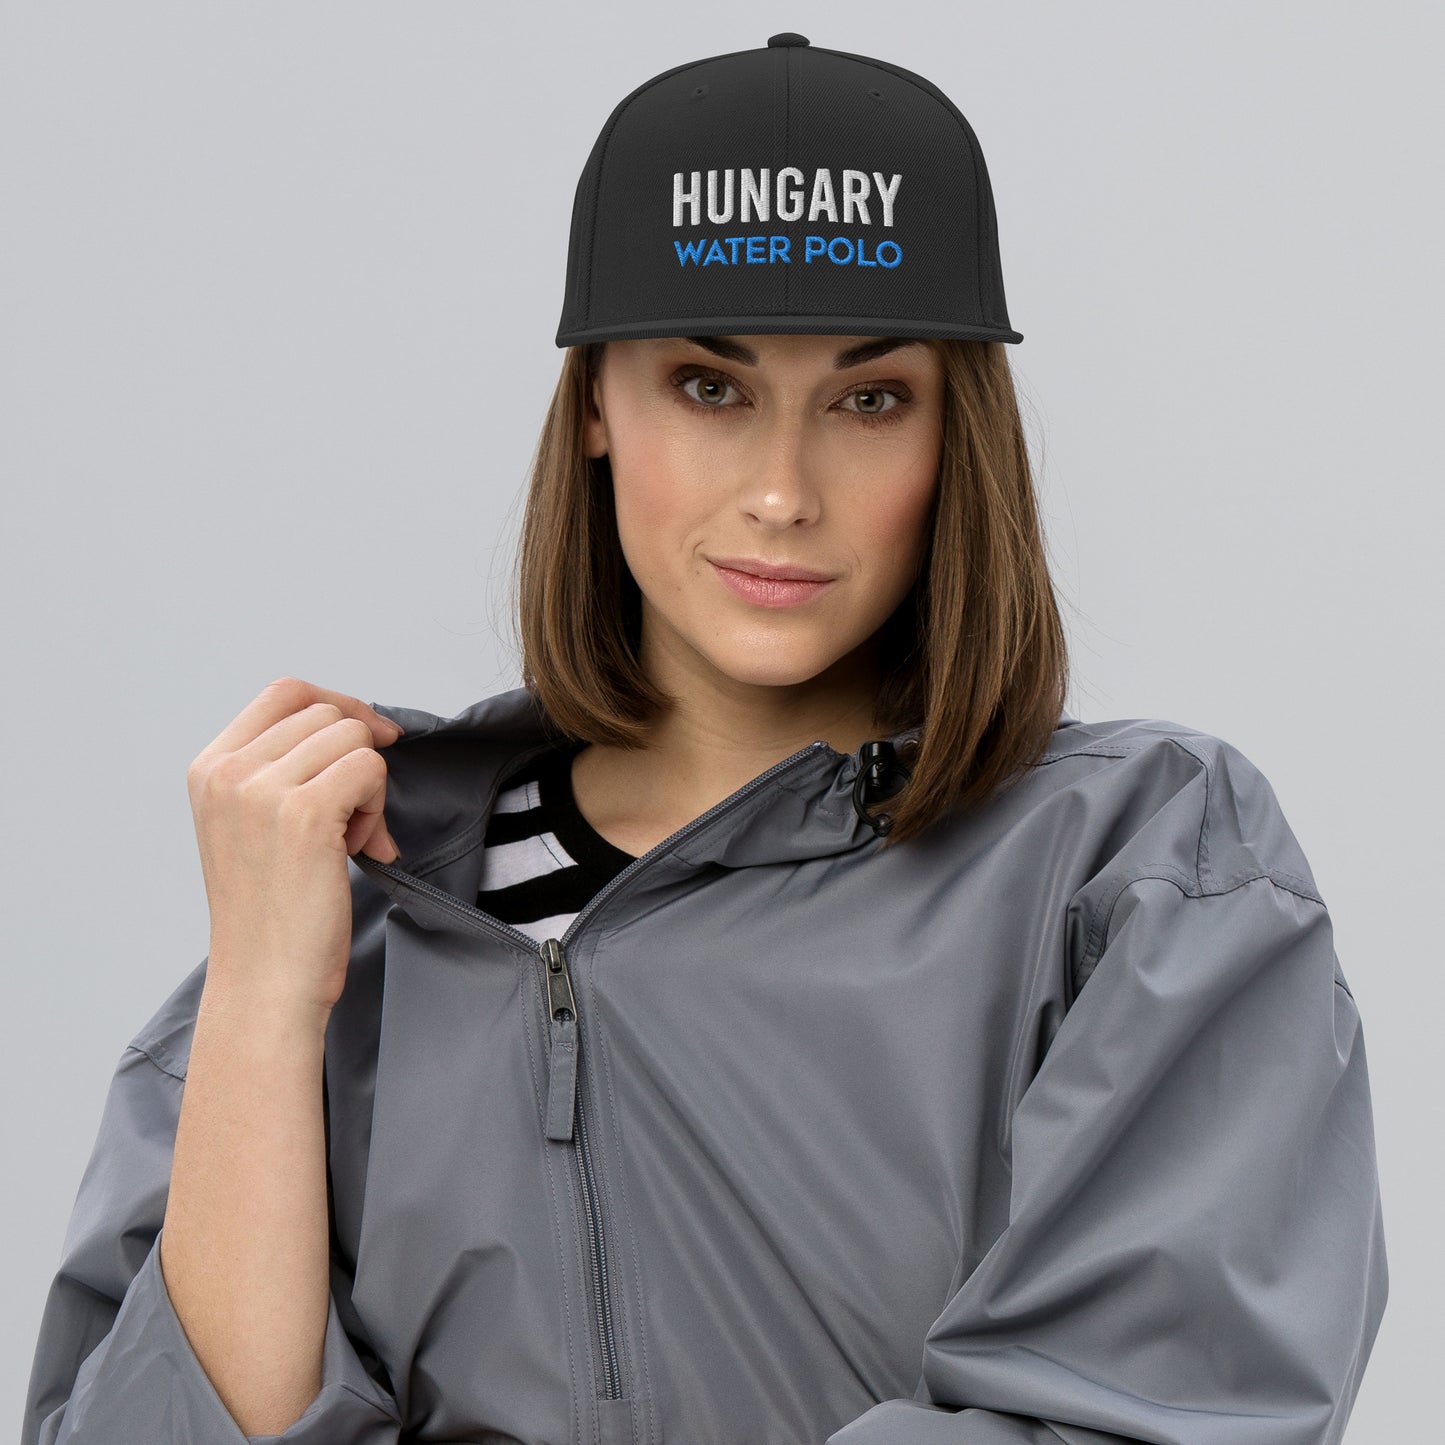 Hungary Water Polo snapback hat